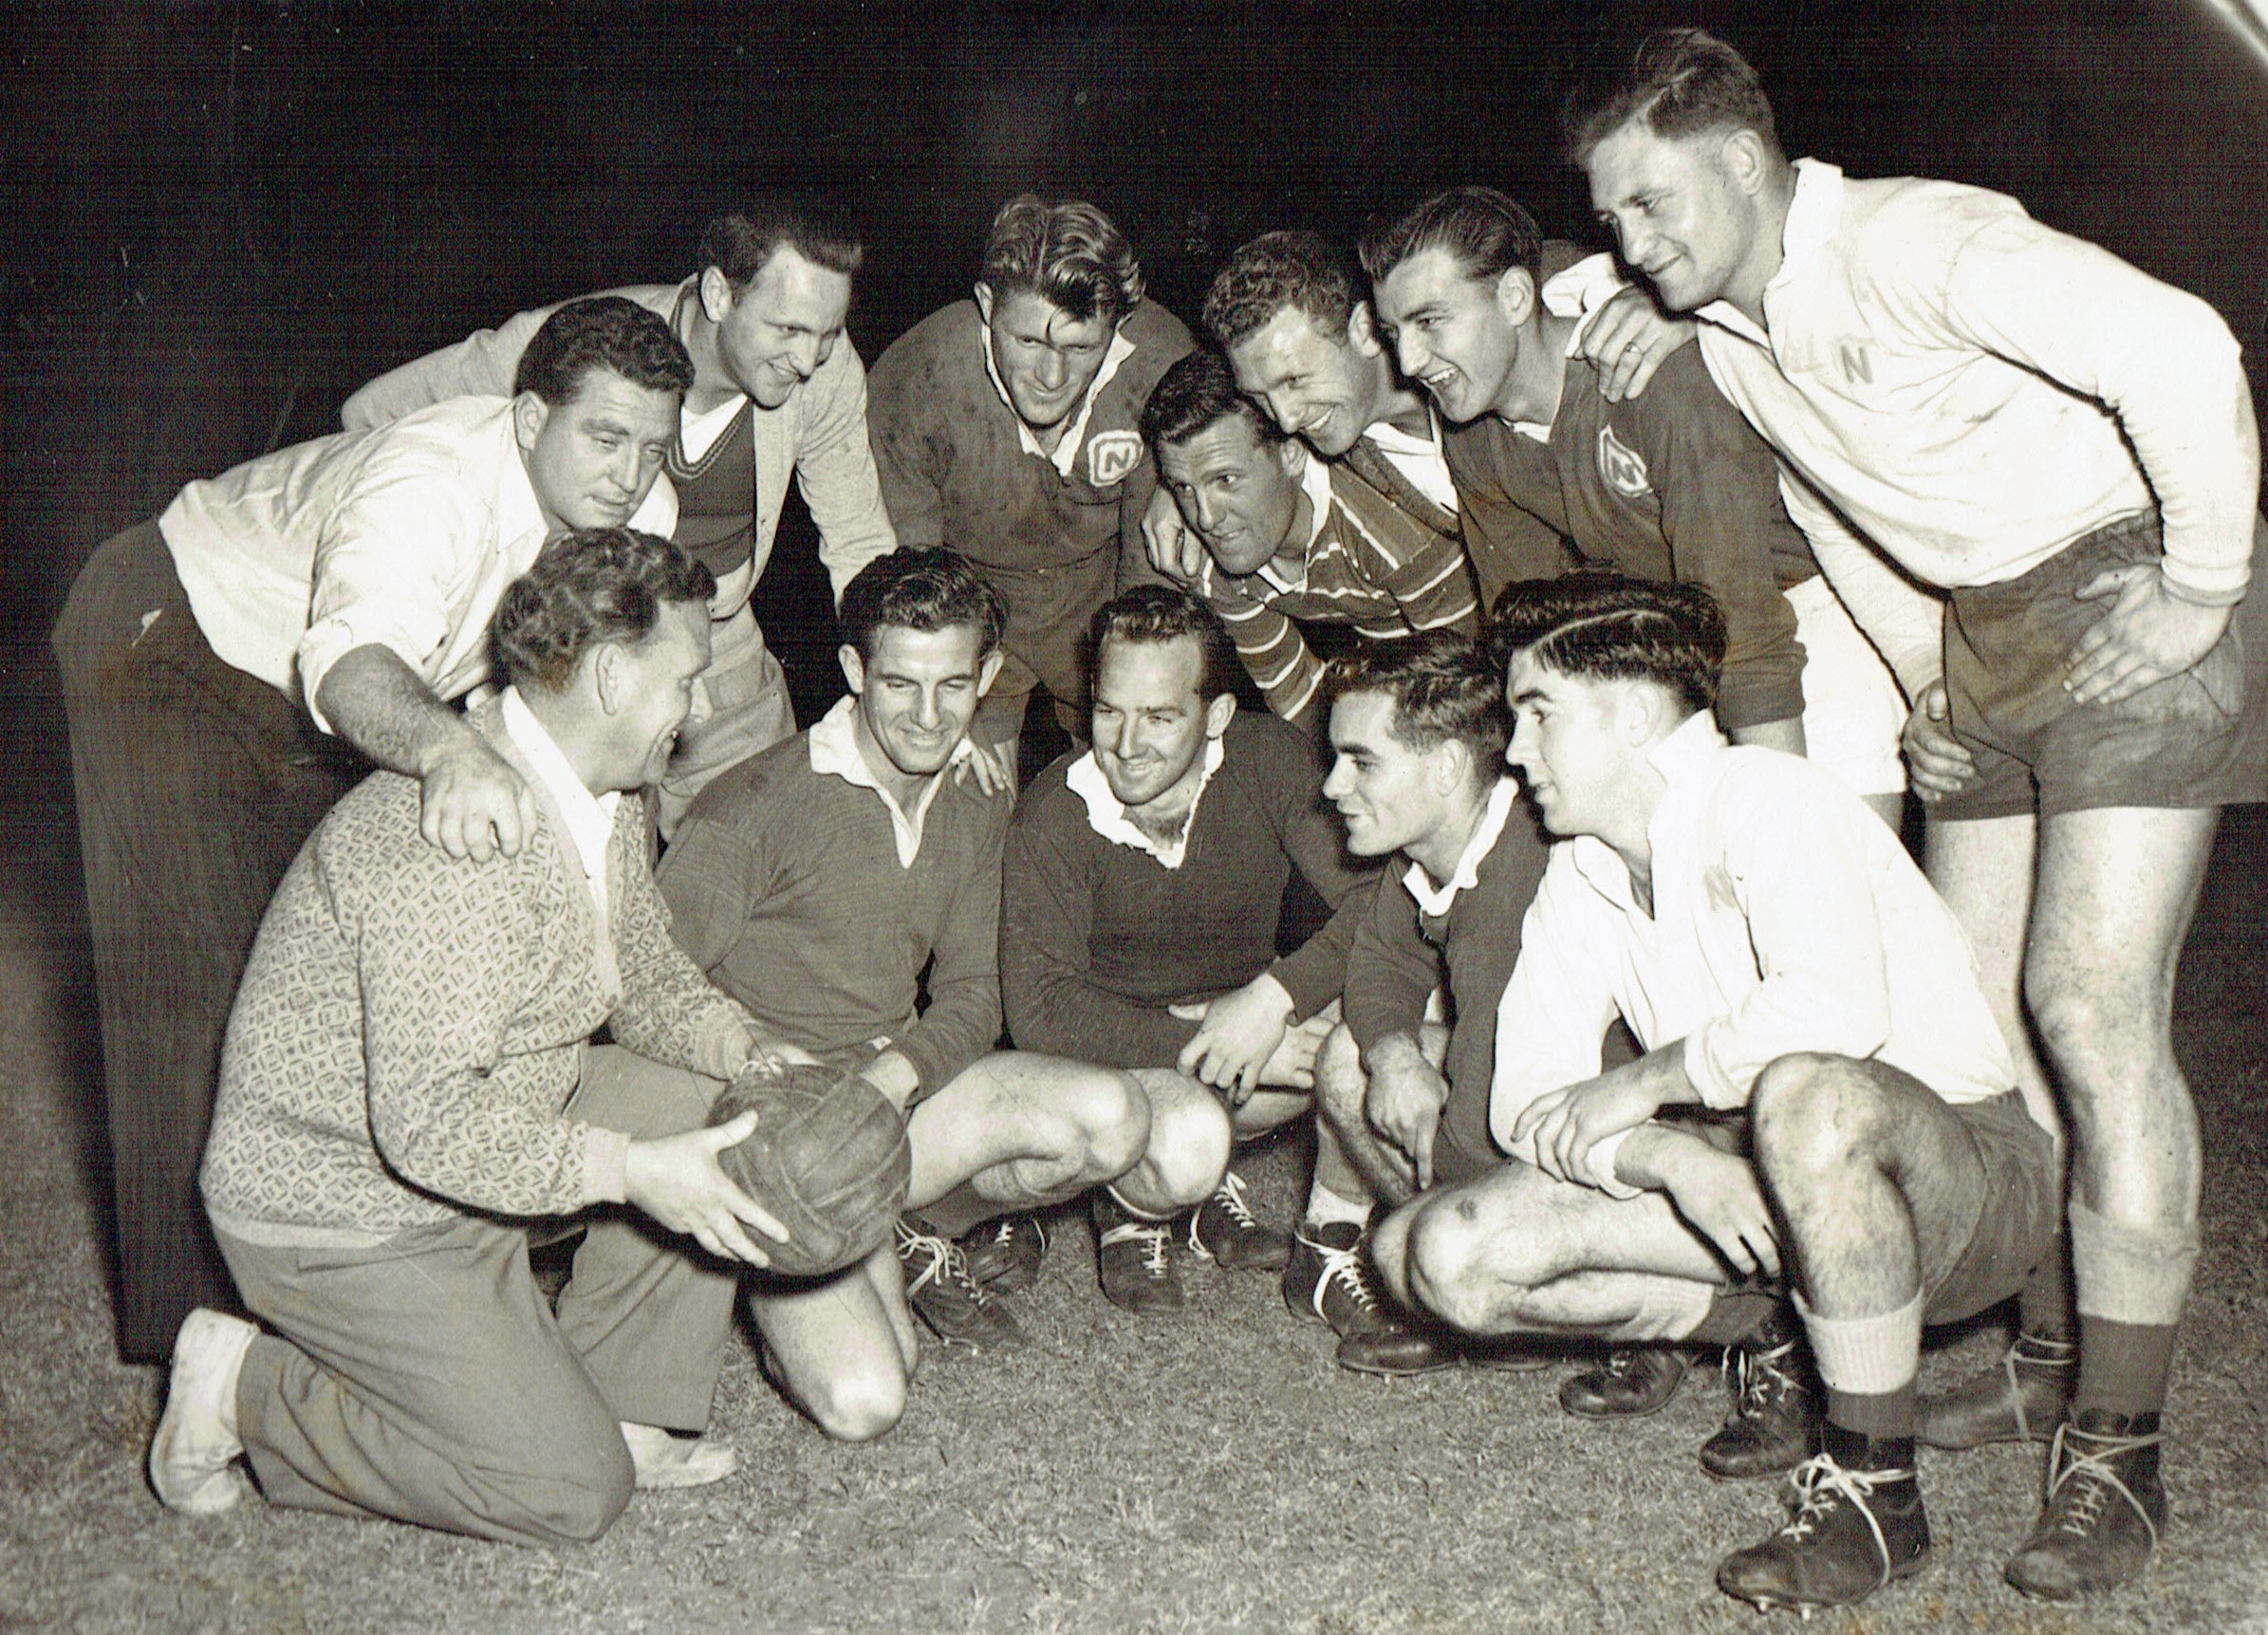 18th September 1953.Charity soccer match.